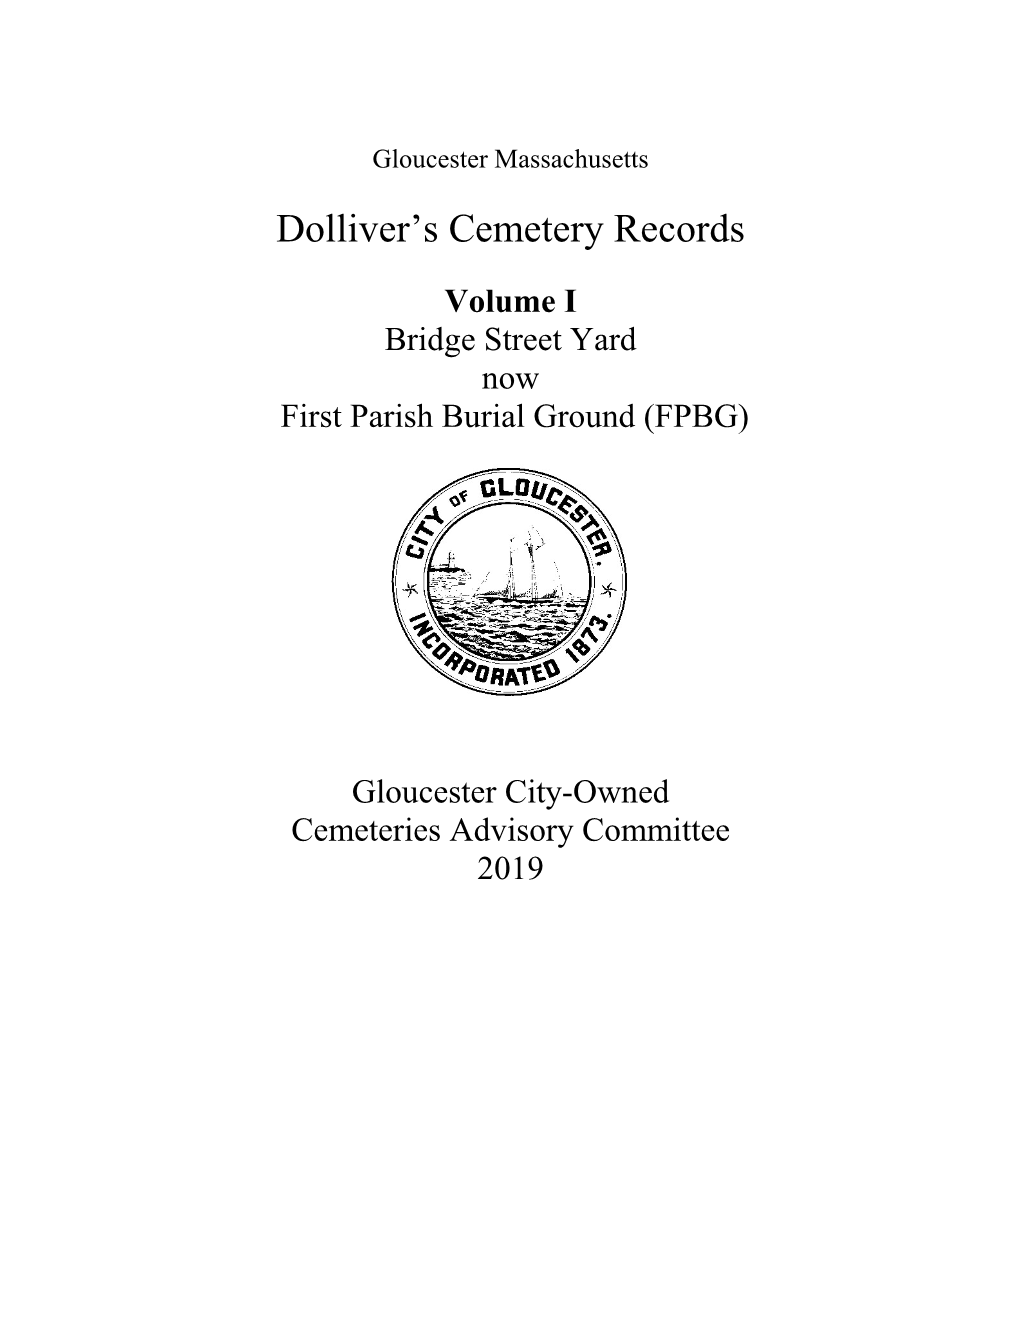 Dolliver's Cemetery Records